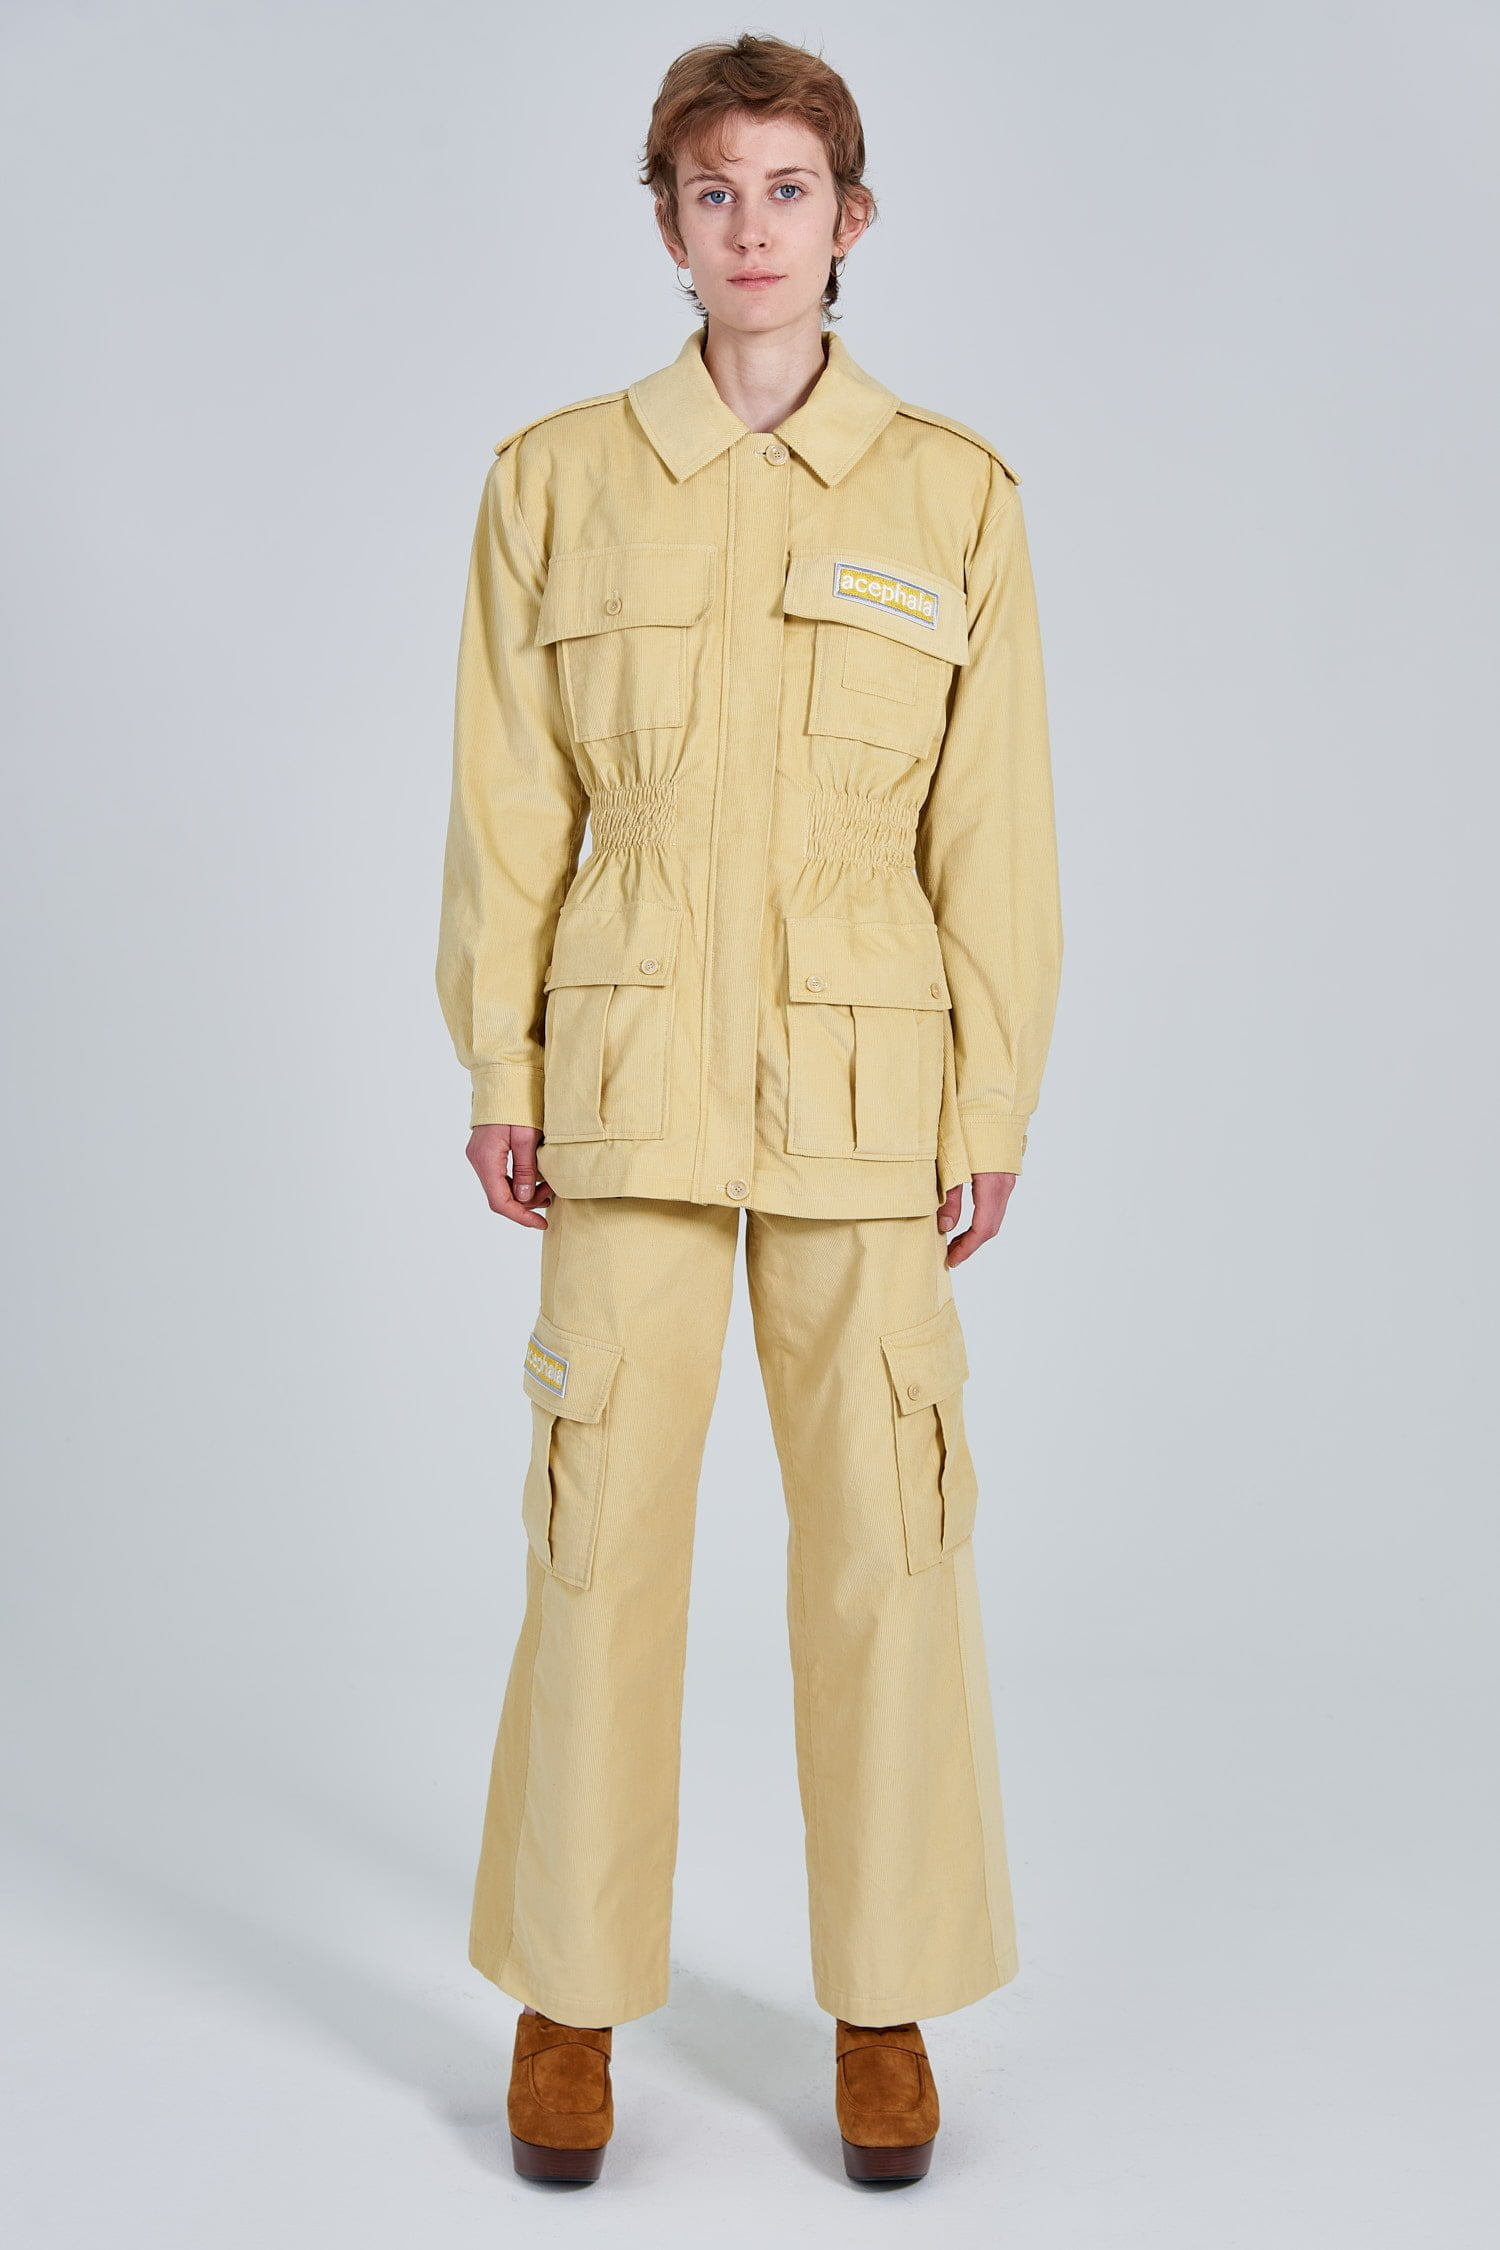 Acephala Fw 2020 21 Yellow Corduroy Trousers Jacket Female Front